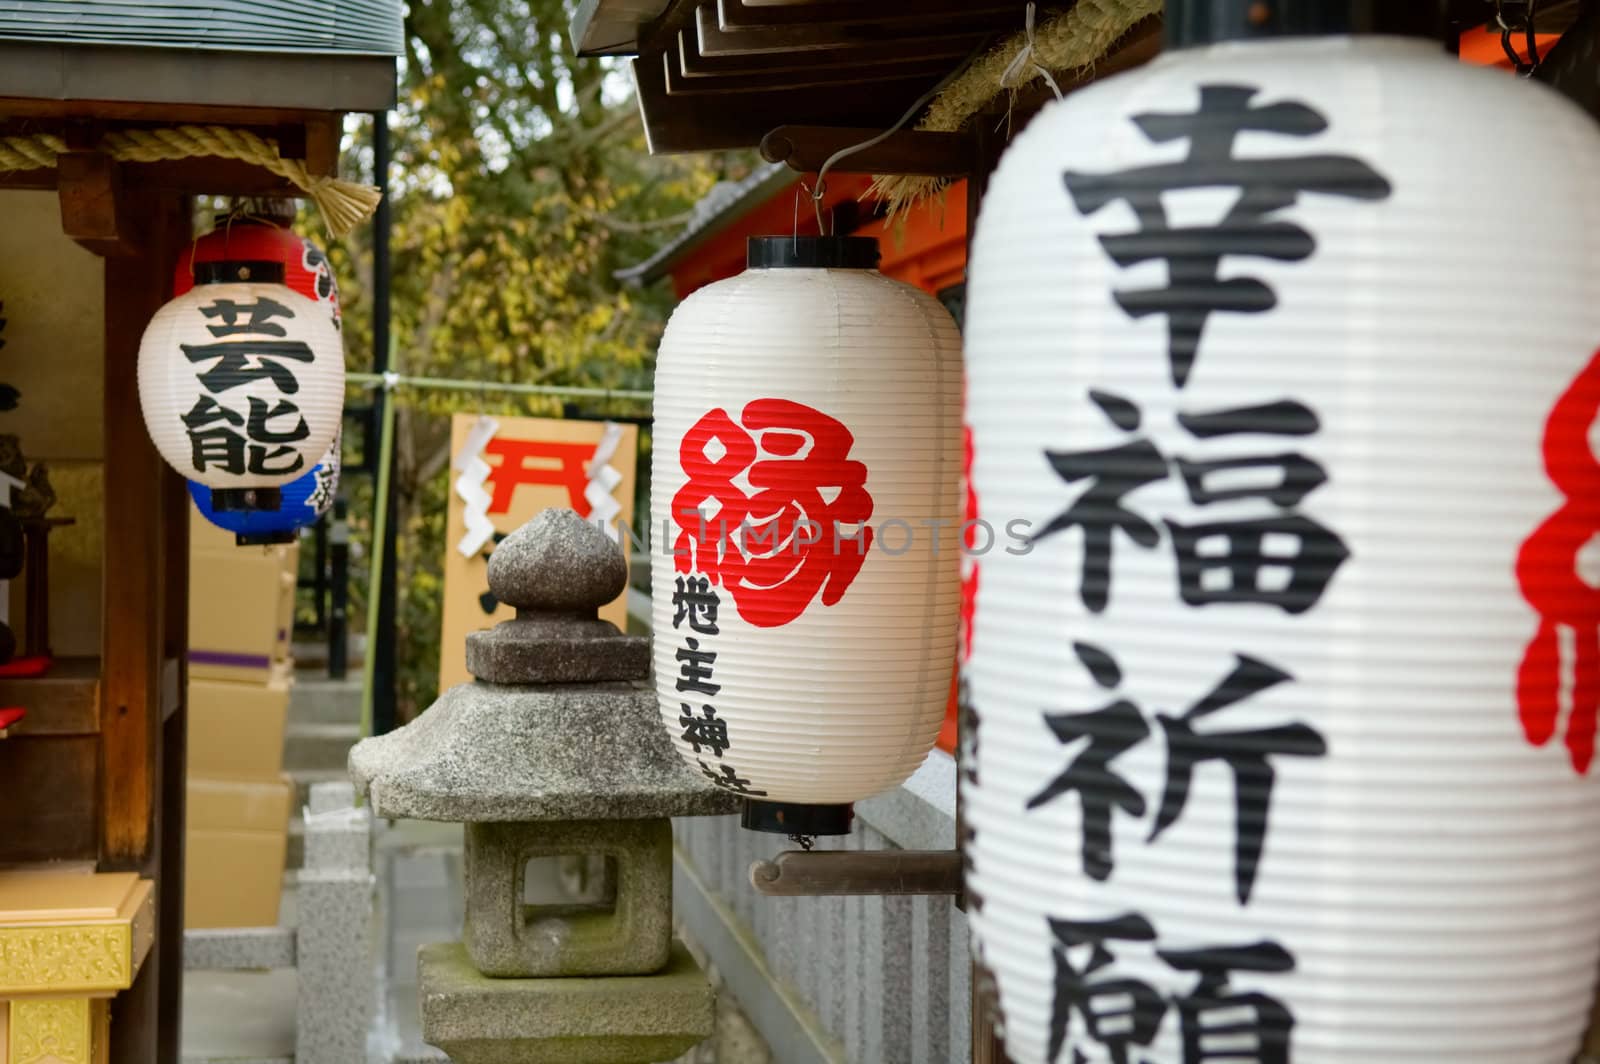 The decrative lanterns in temple with fortune script